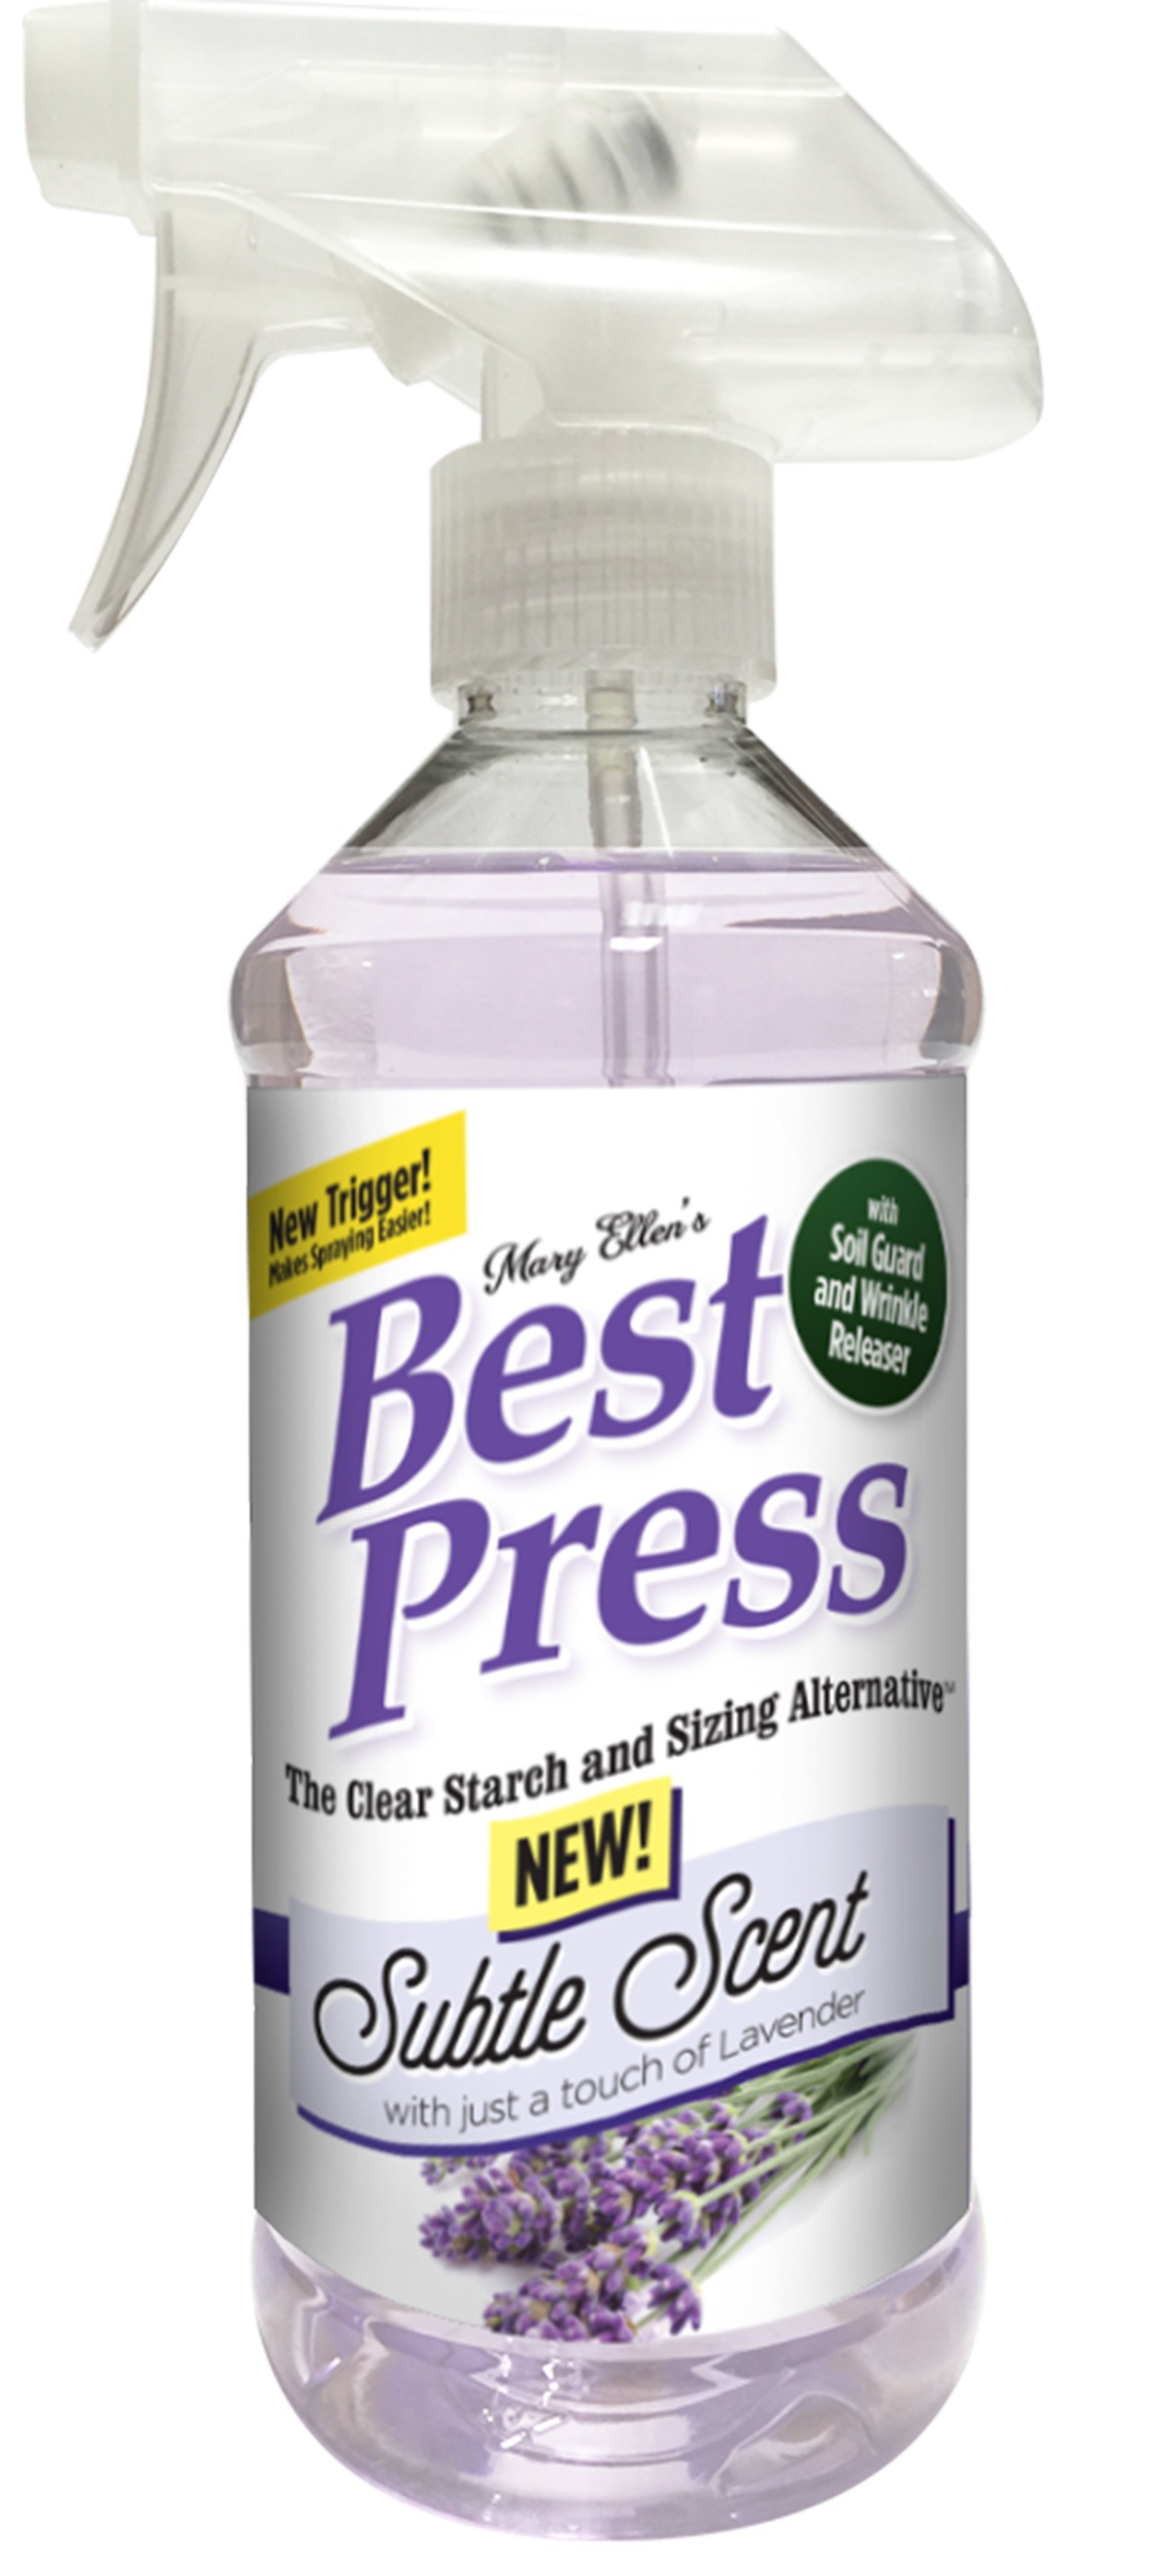 Good press. Best product.